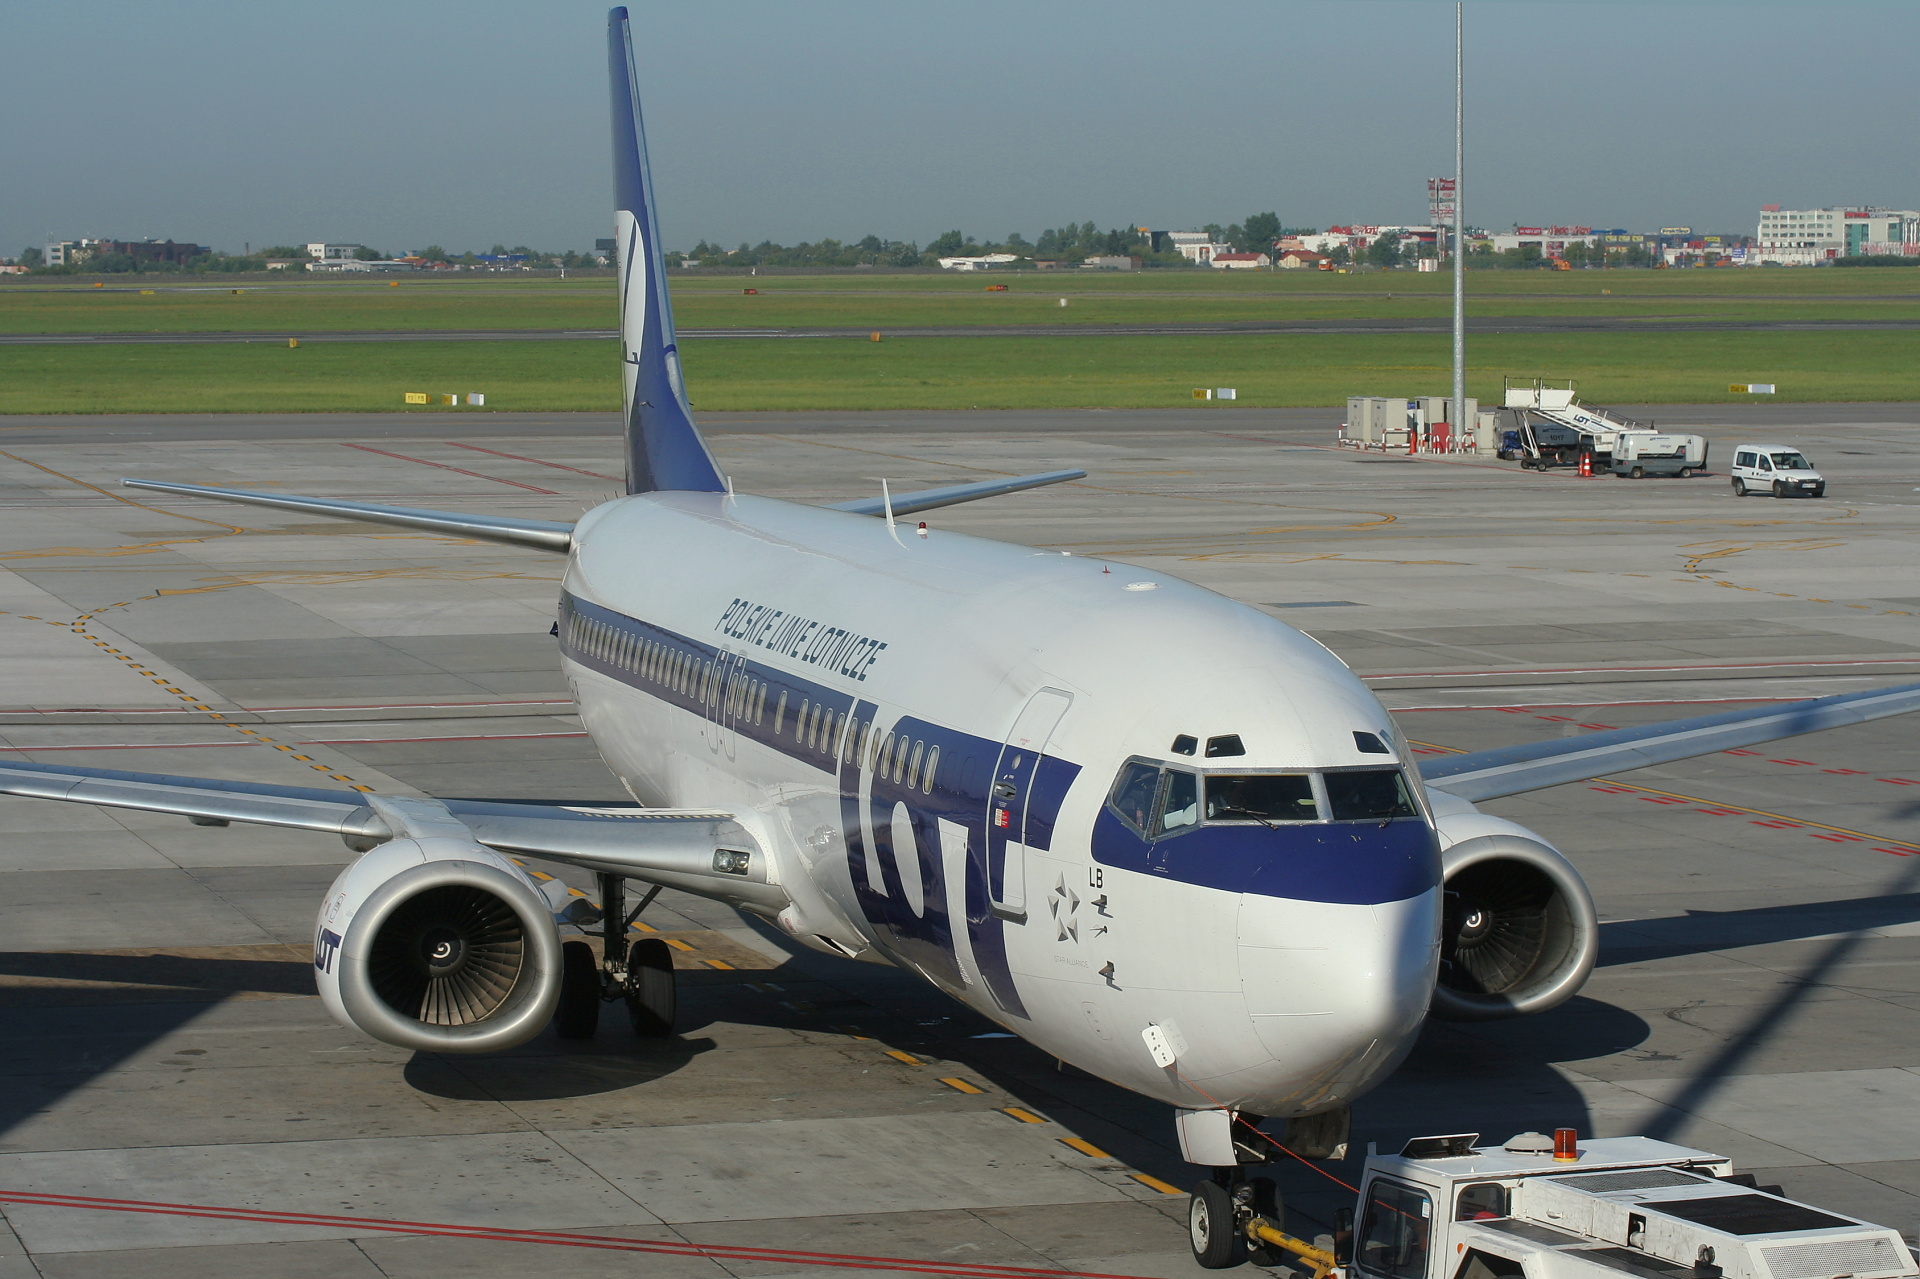 SP-LLB (Aircraft » EPWA Spotting » Boeing 737-400 » LOT Polish Airlines)